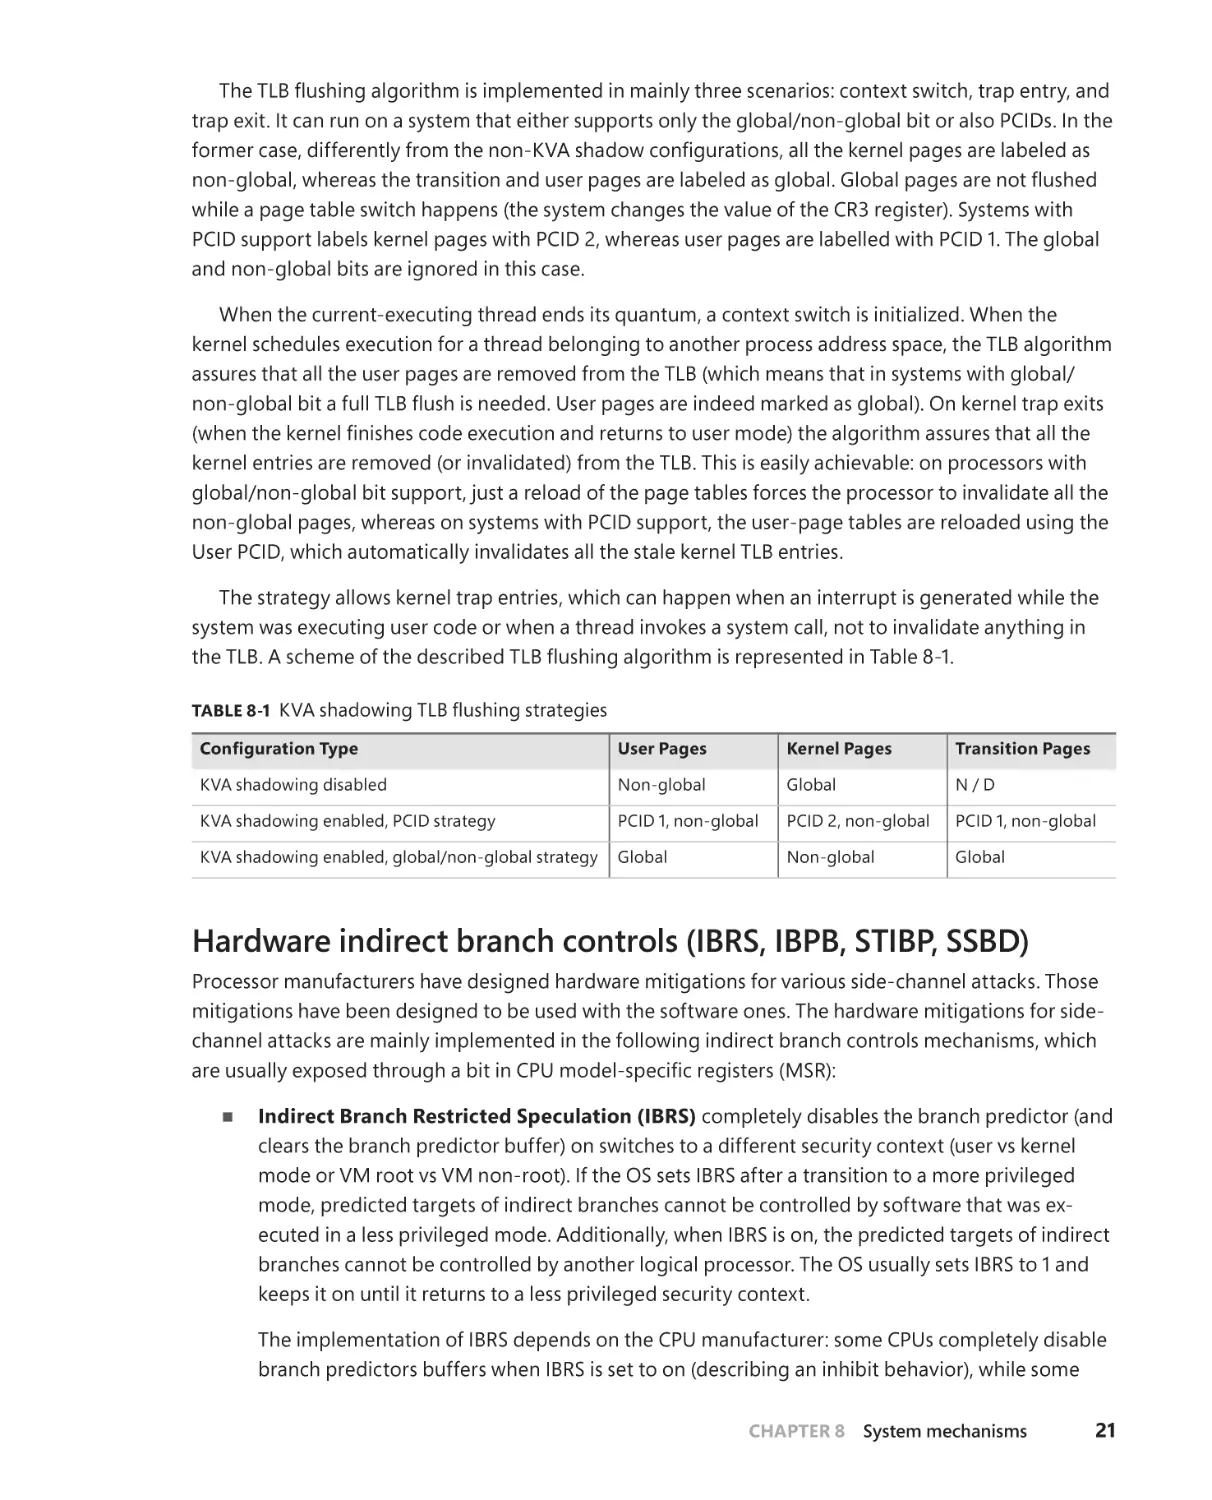 Hardware indirect branch controls (IBRS, IBPB, STIBP, SSBD)